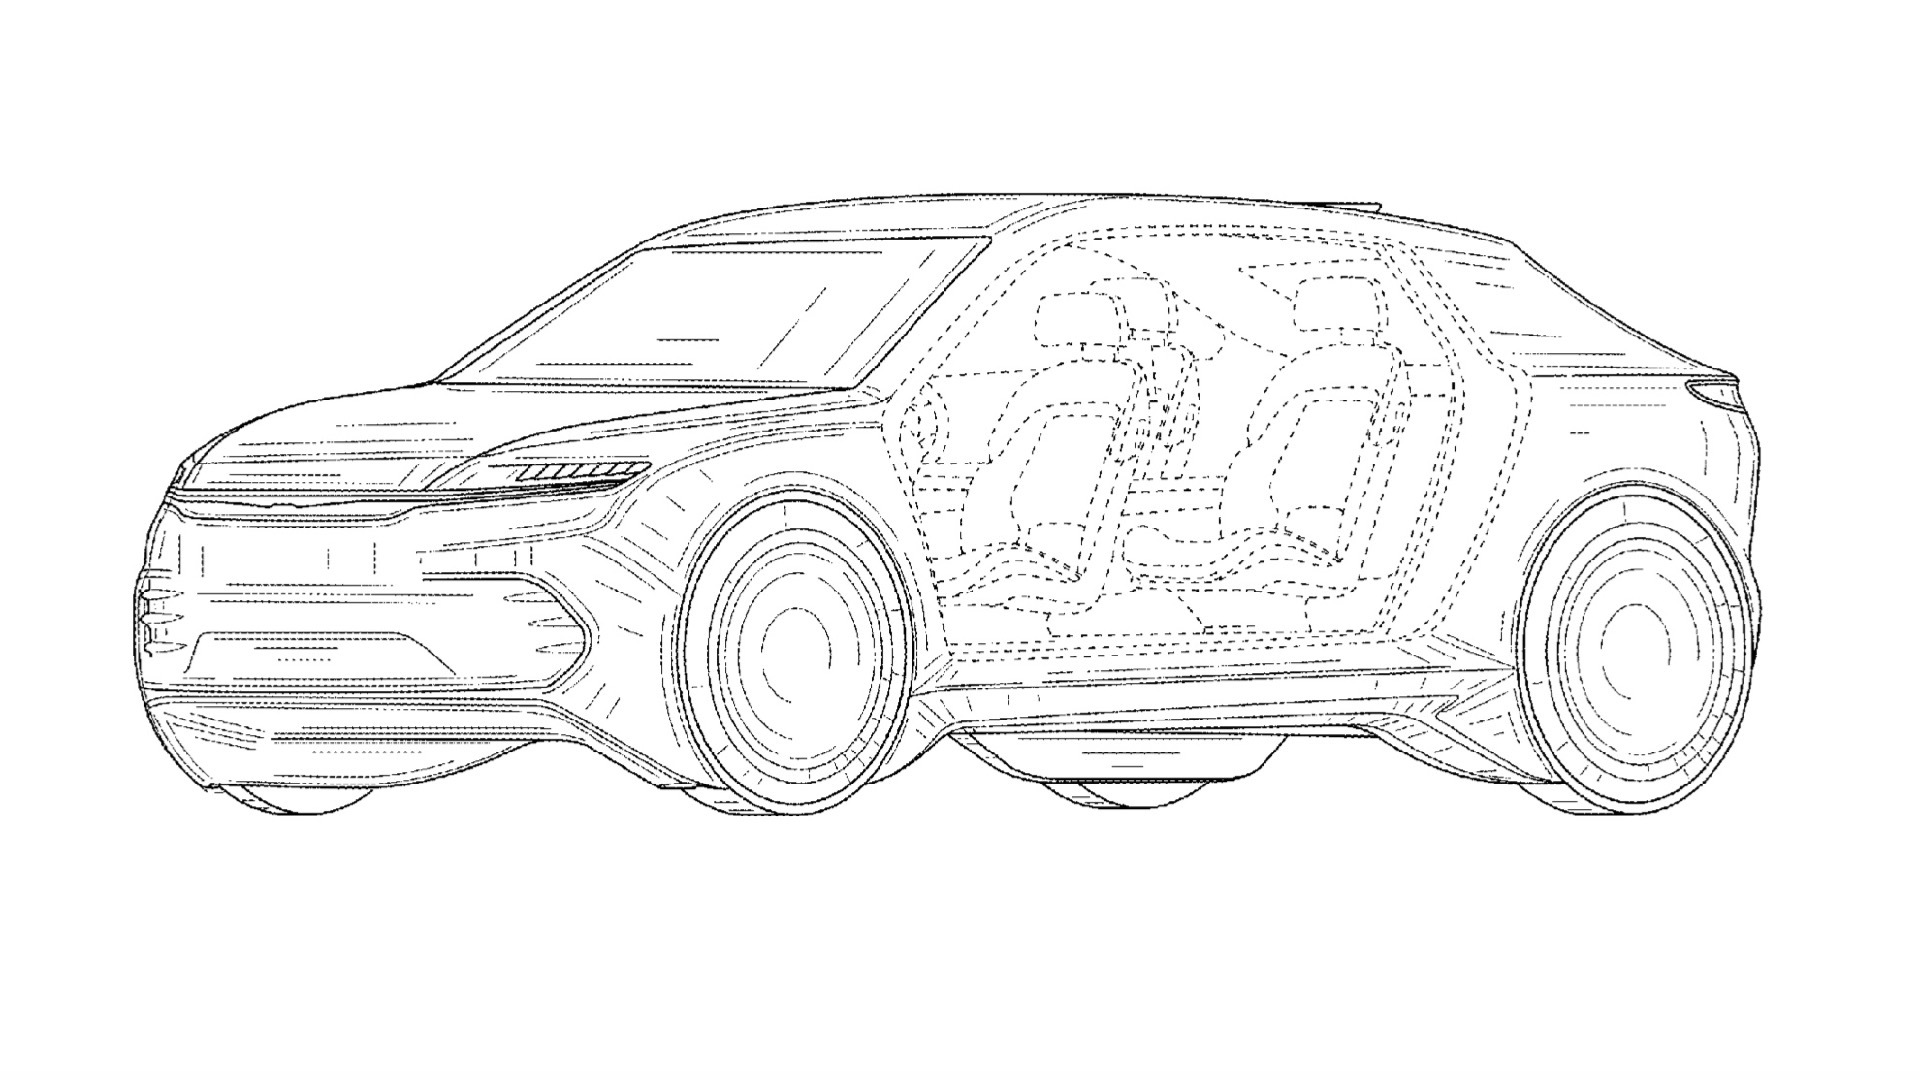 Chrysler Airflow concept patent image